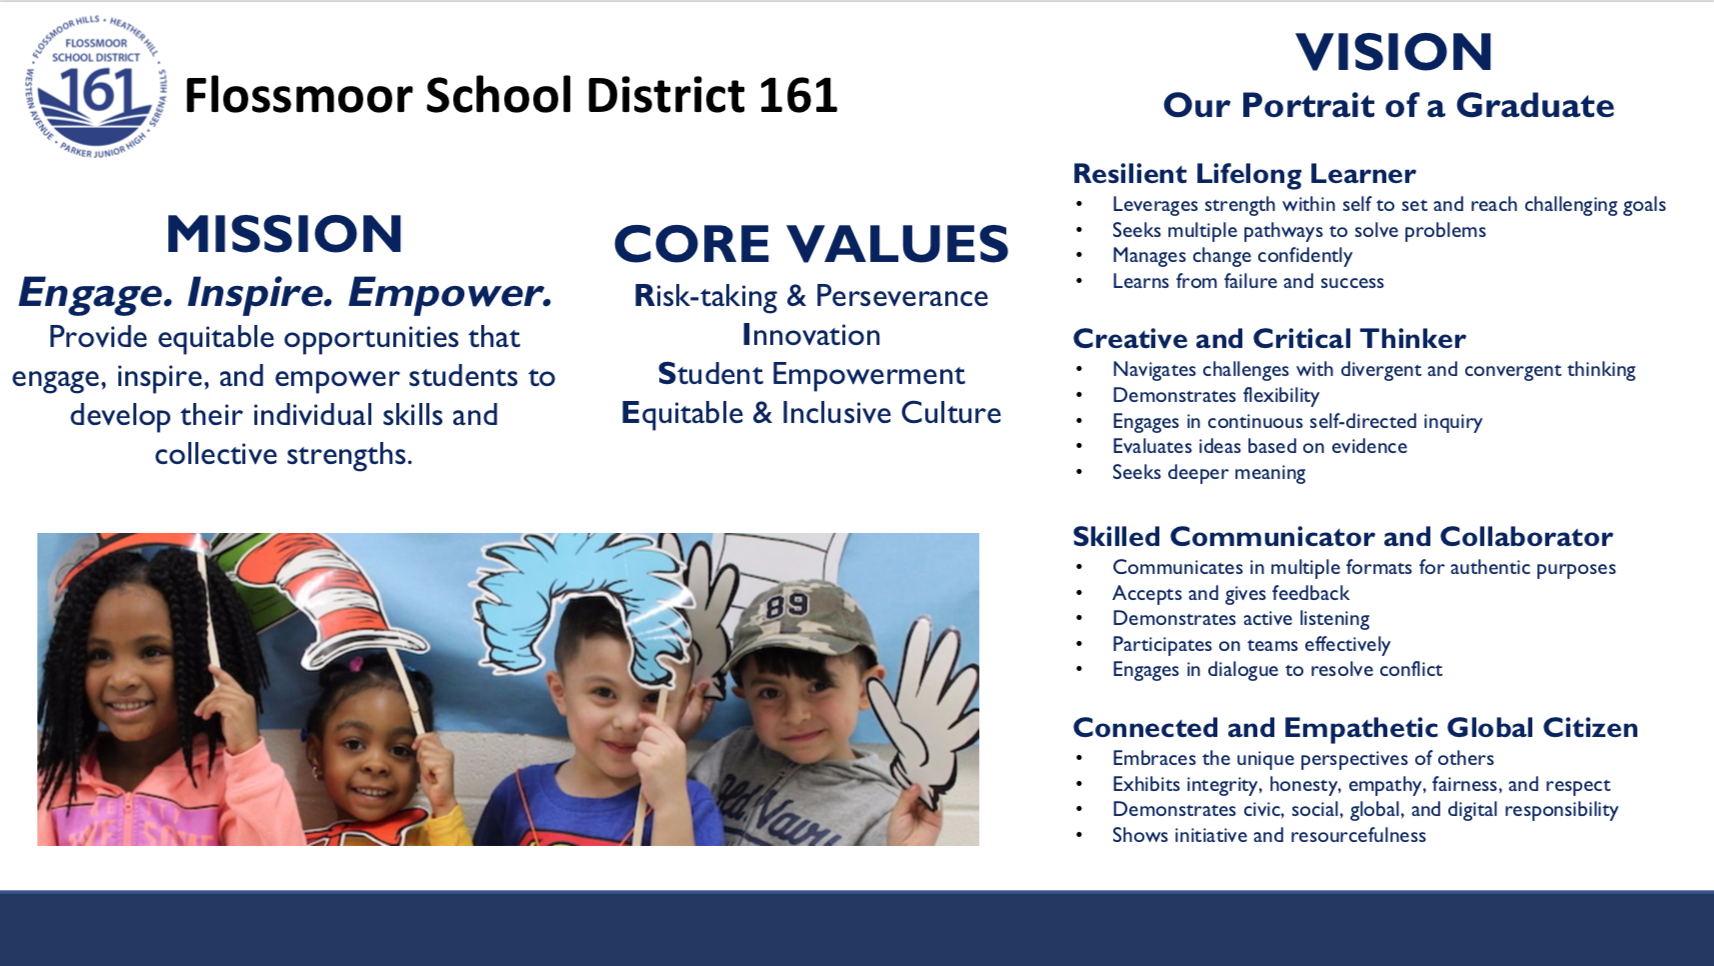 Flossmoor School District 161, Mission, Core Values & Vision